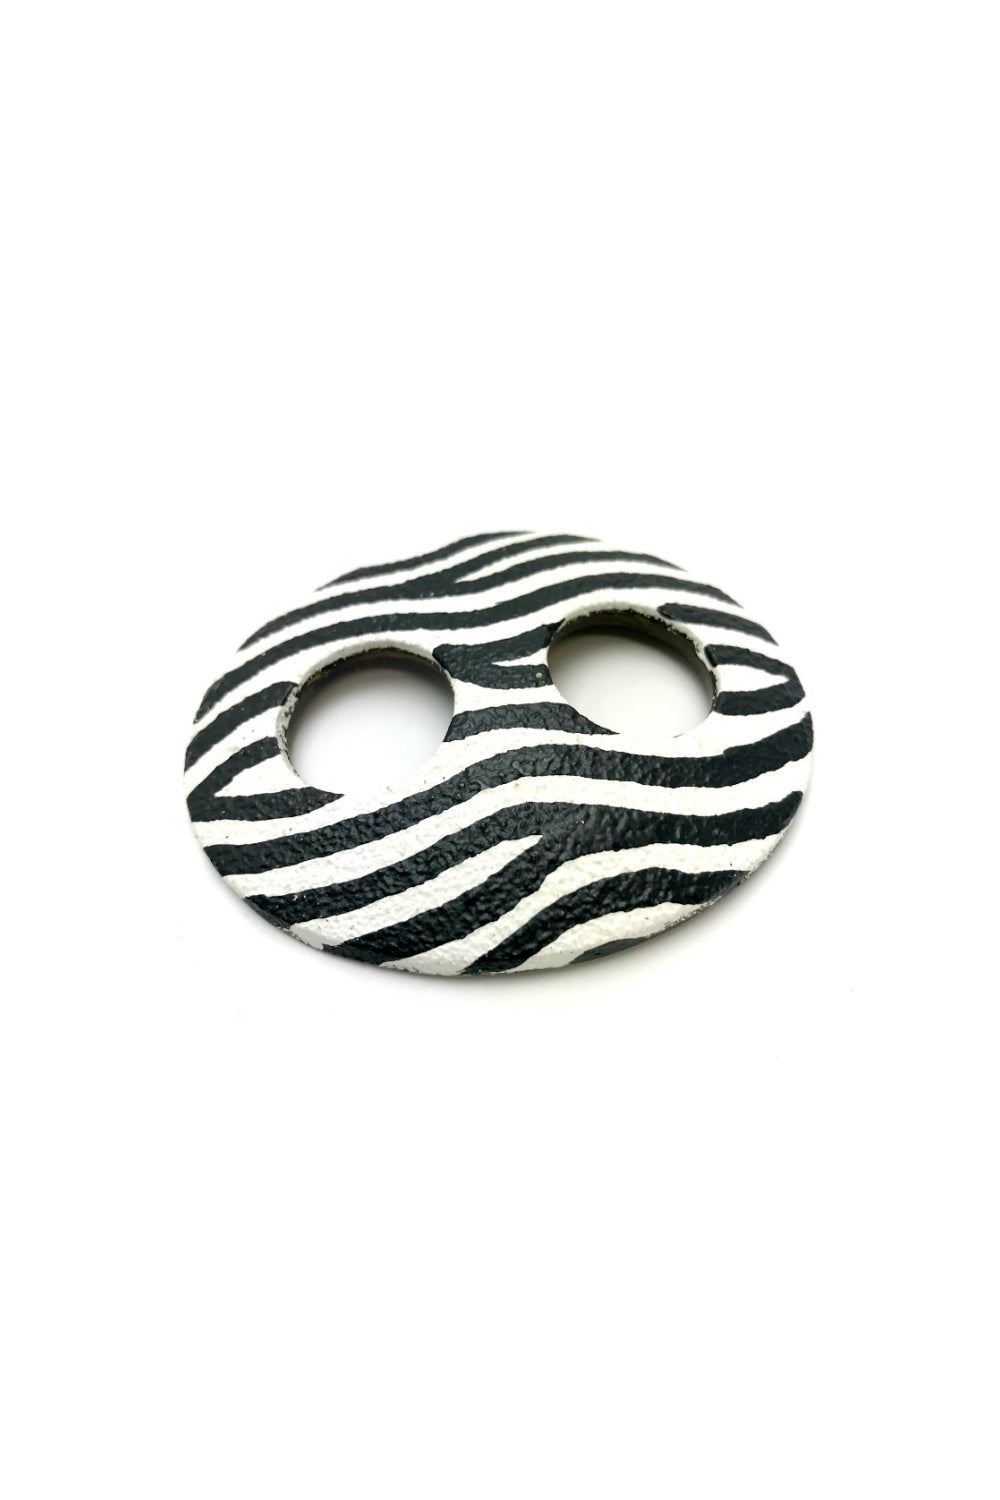 coconut-shell-sarong-buckles-zebra-hand-painted-oval-shape